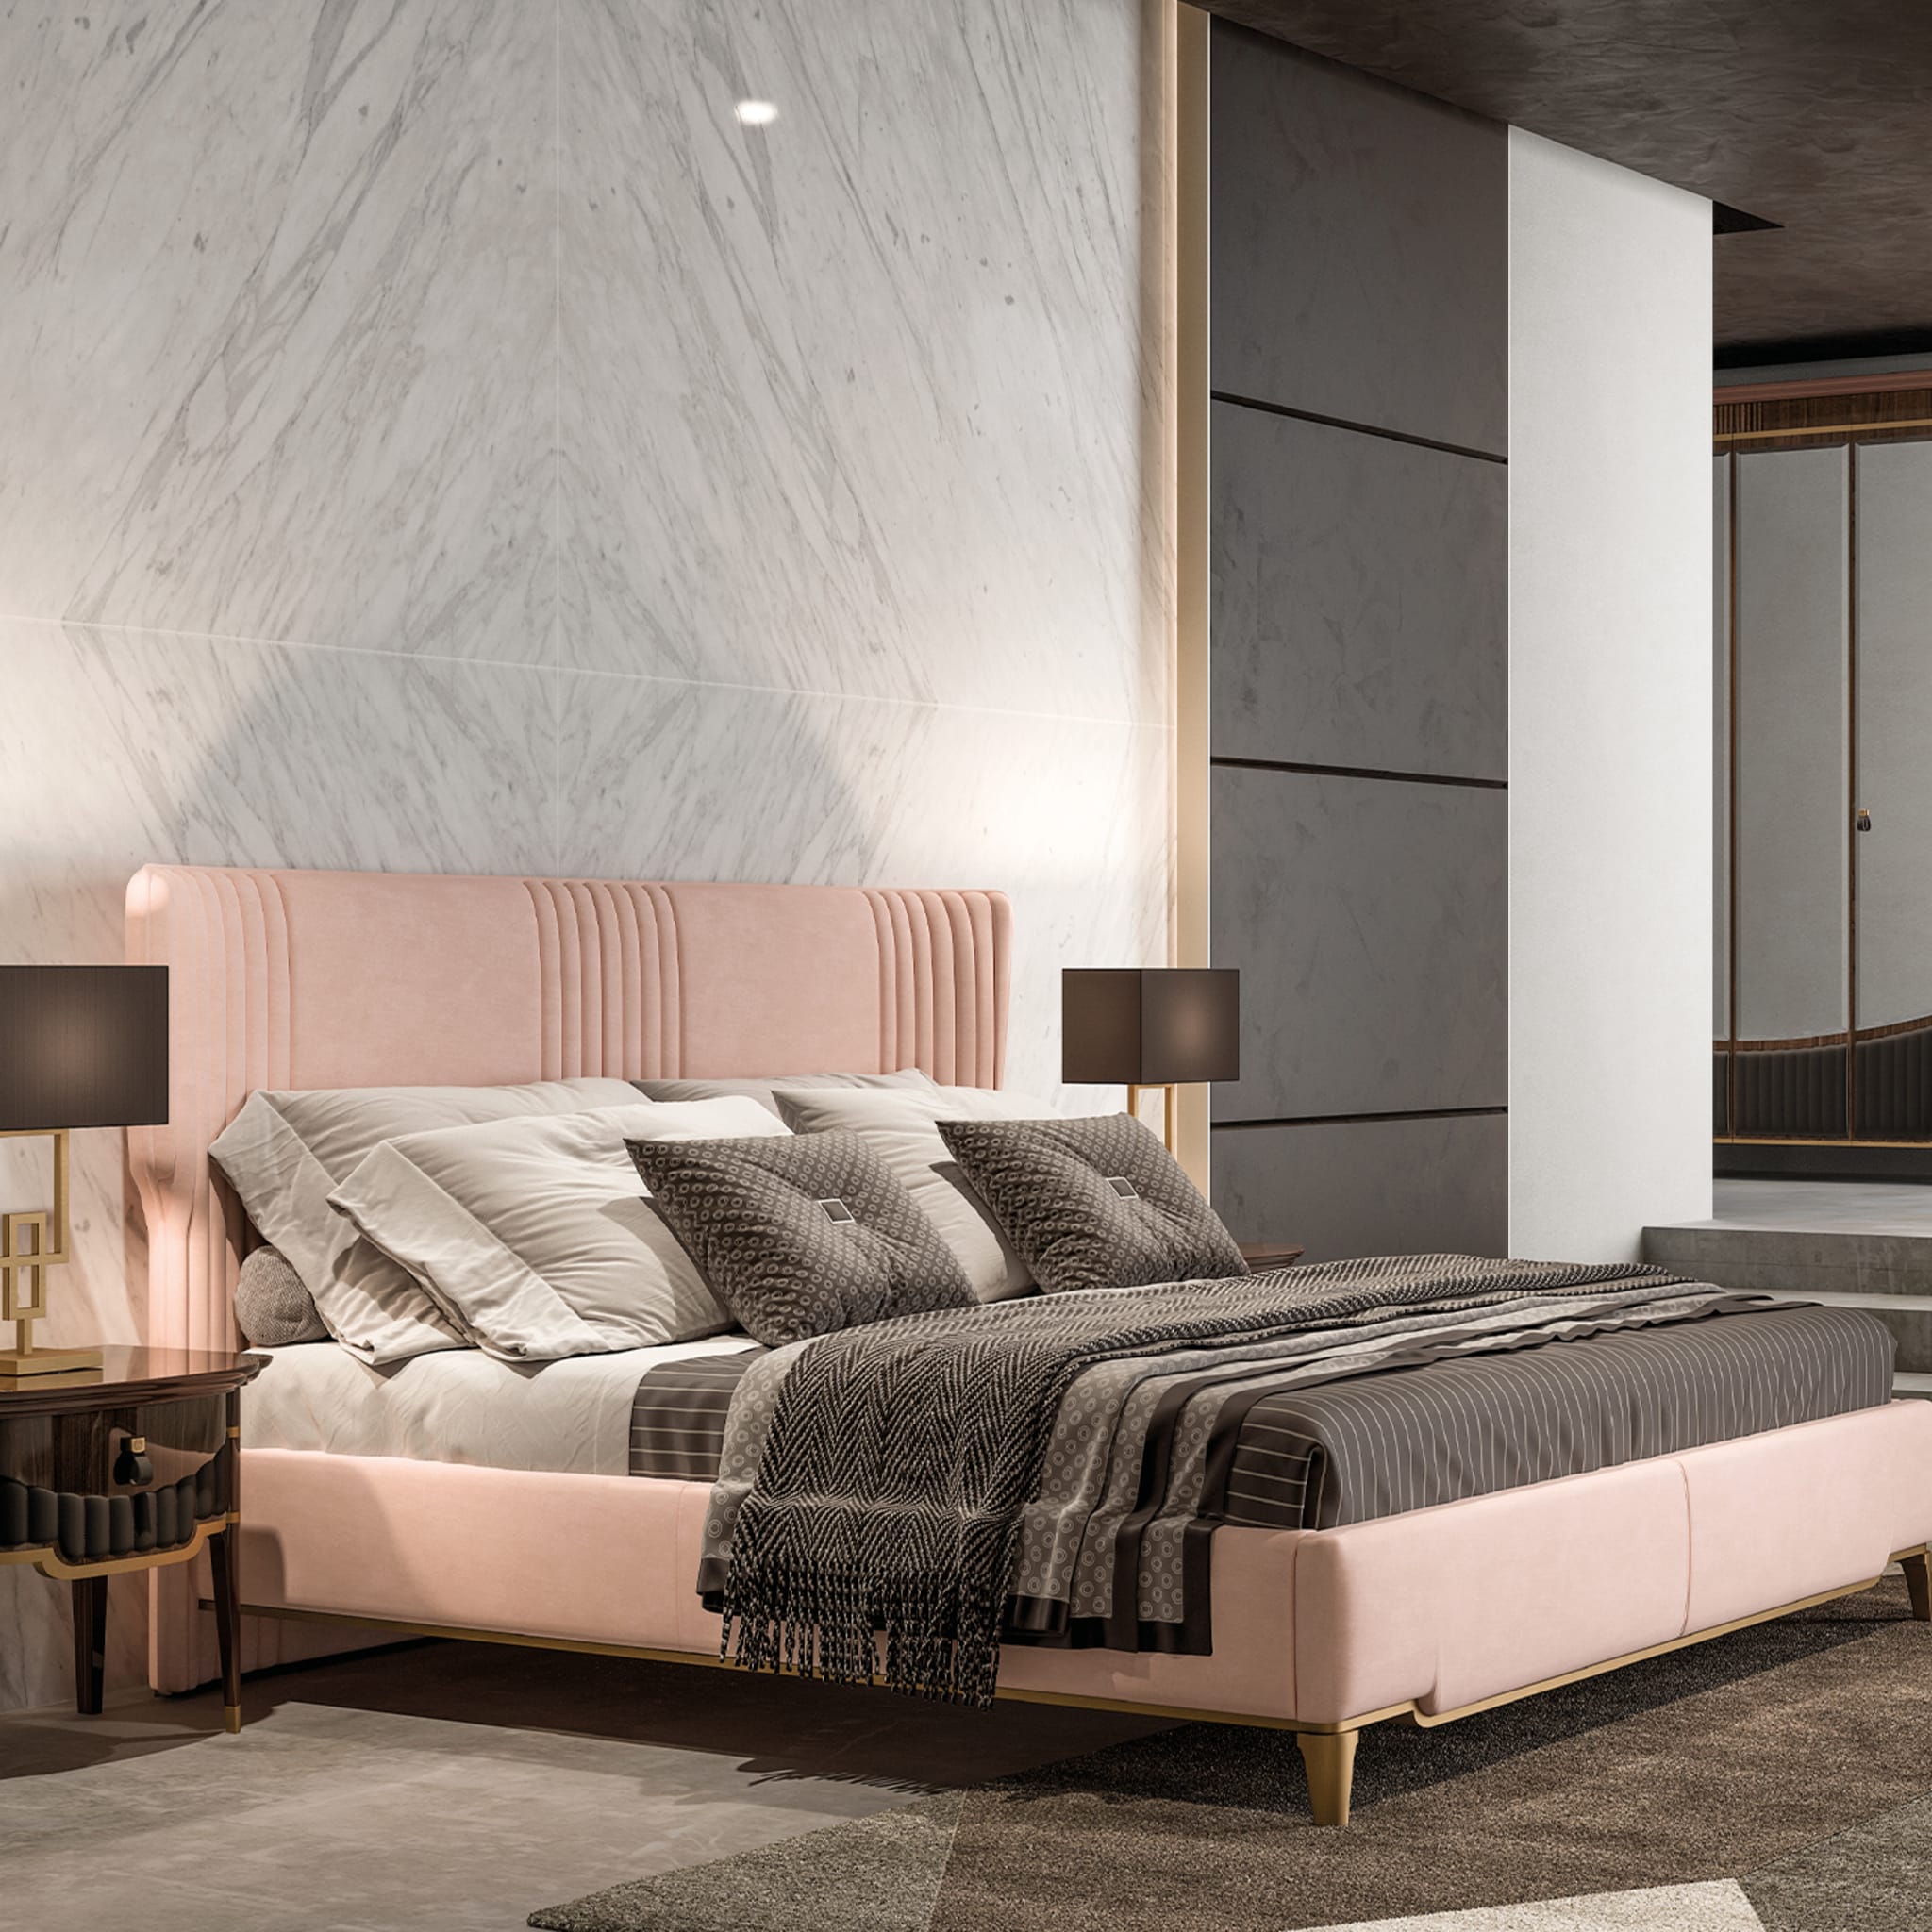 Gattopardo Pink Double Bed - Alternative view 1